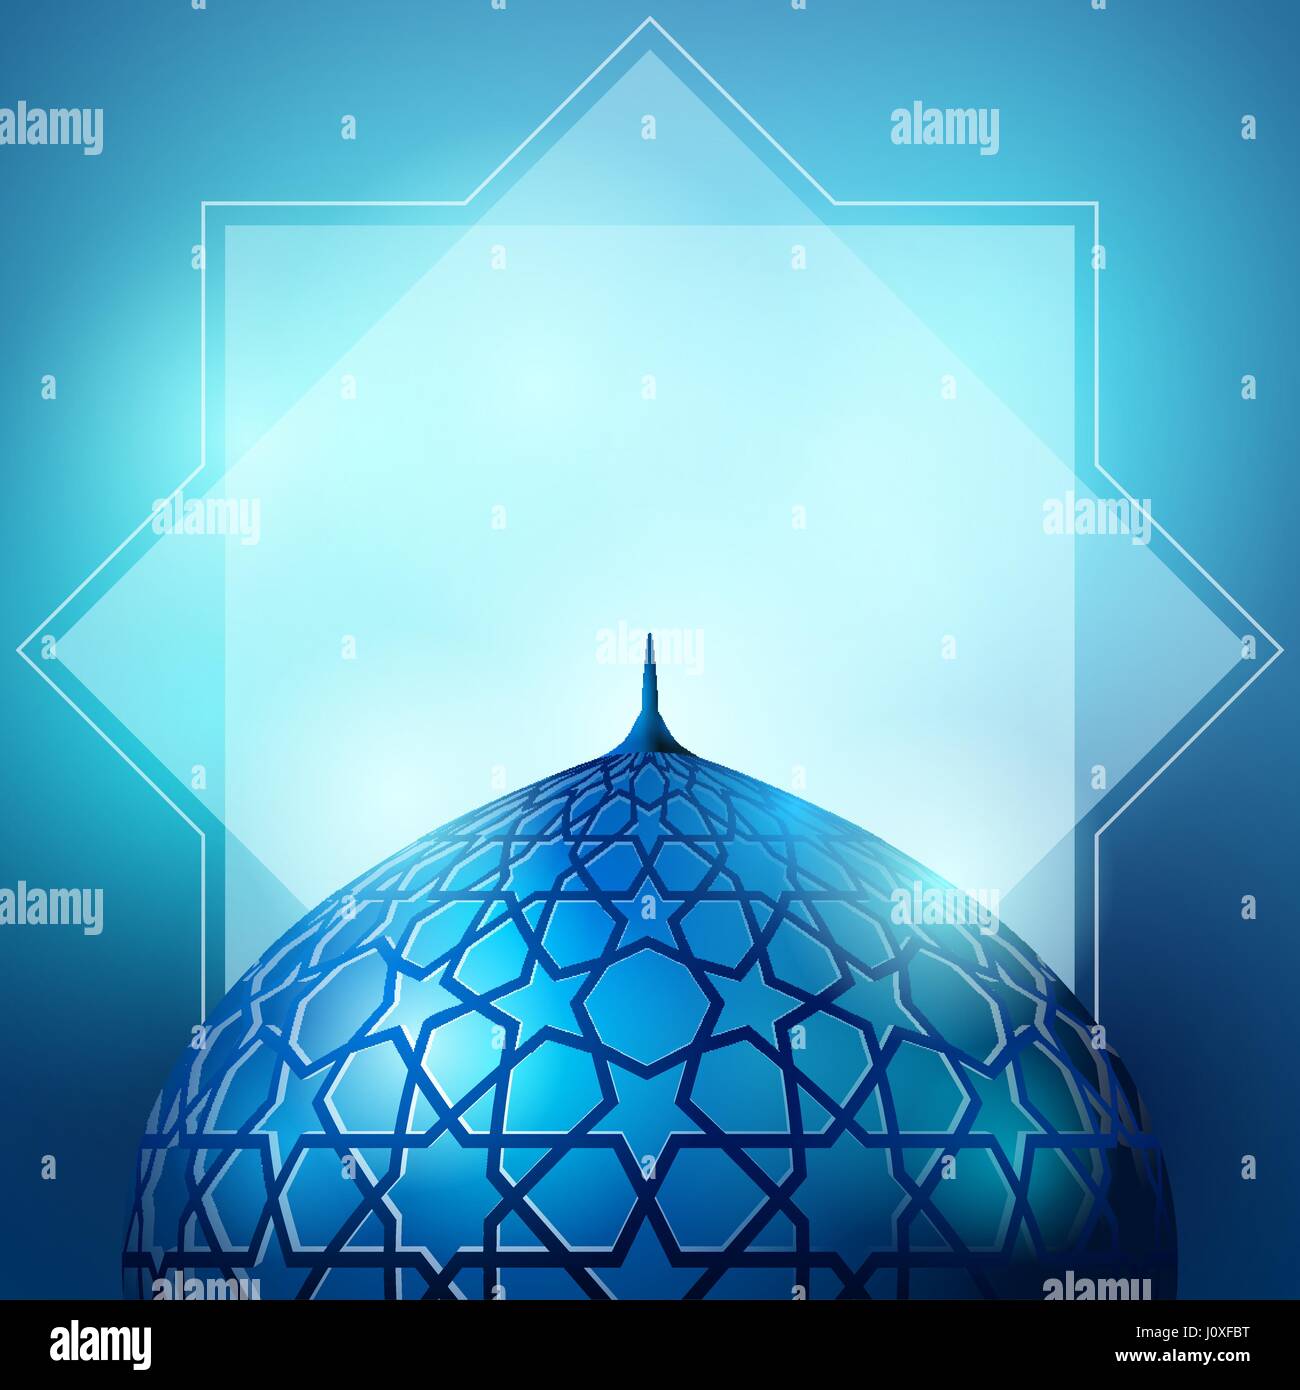 Download 45 Background Islamic HD Terbaru